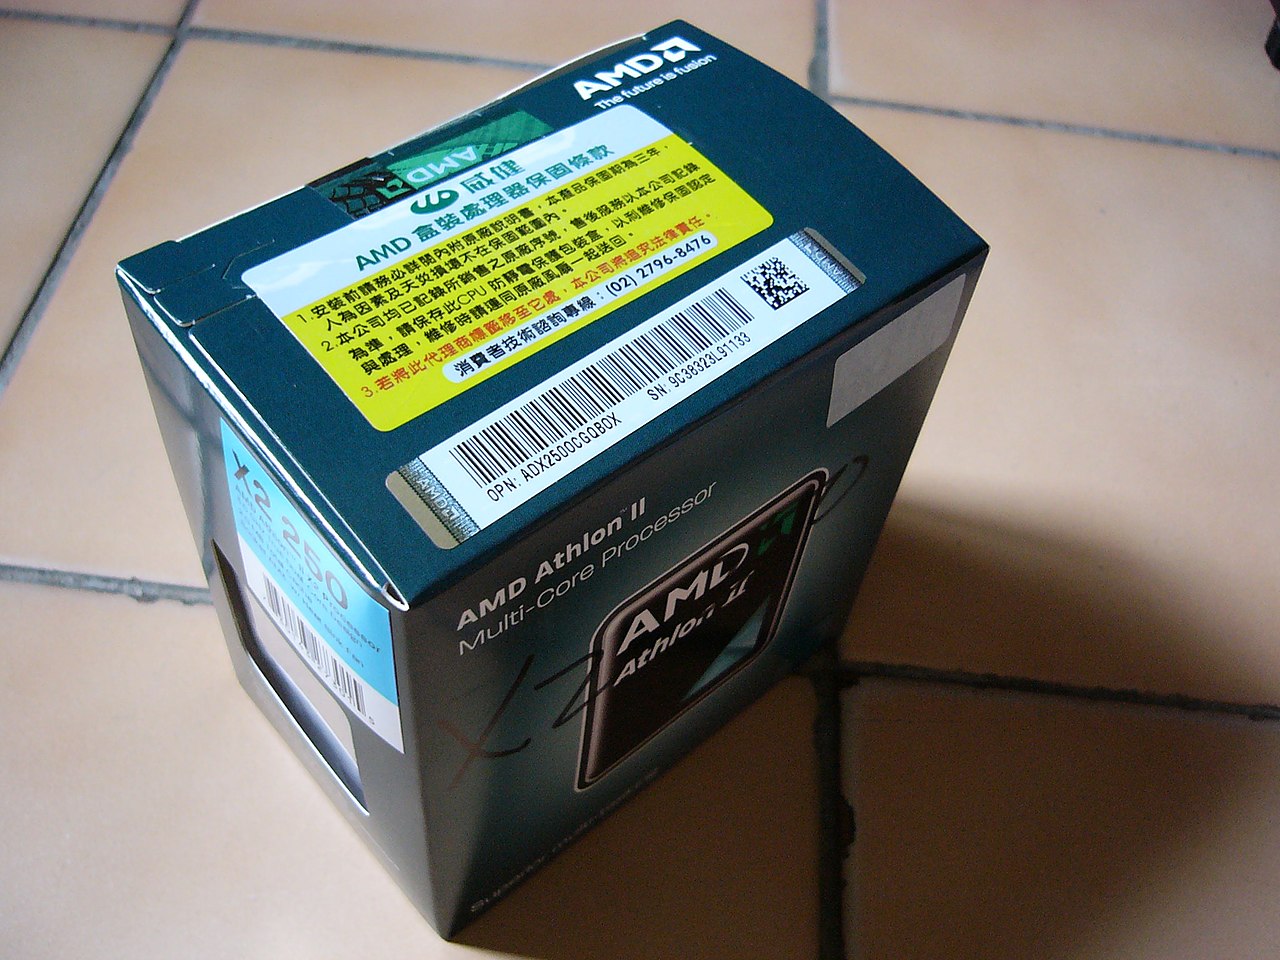 Curiosity Diplomacy Caroline File:AMD Athlon II X2 250 package box of Weikeng Industrial 20100730.jpg -  Wikimedia Commons